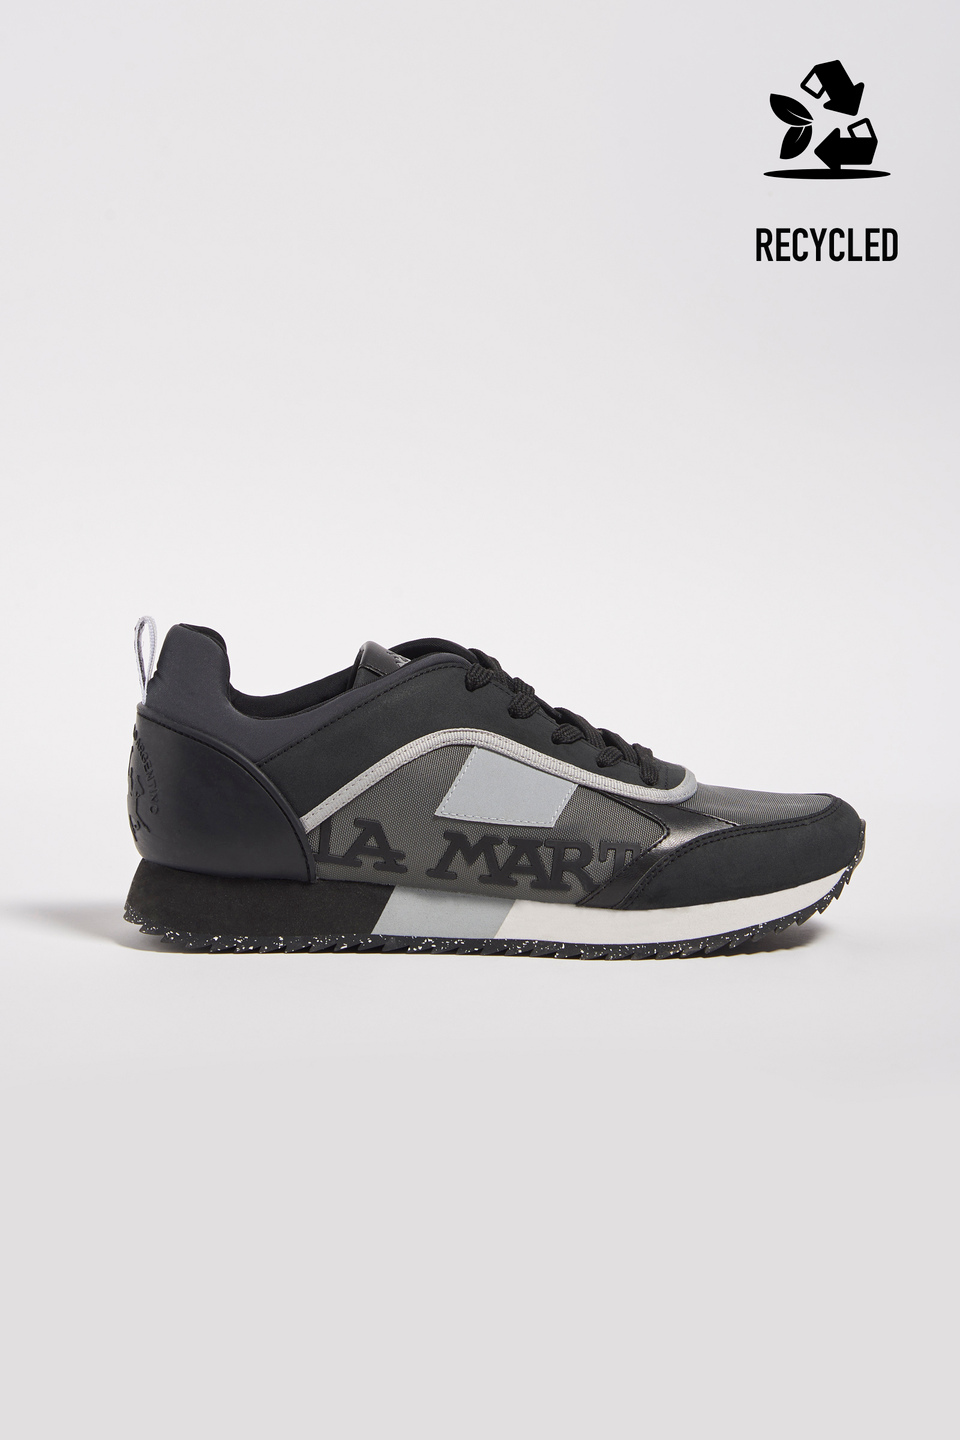 Zweifarbige vegane Sneaker aus Nubuk | La Martina - Official Online Shop